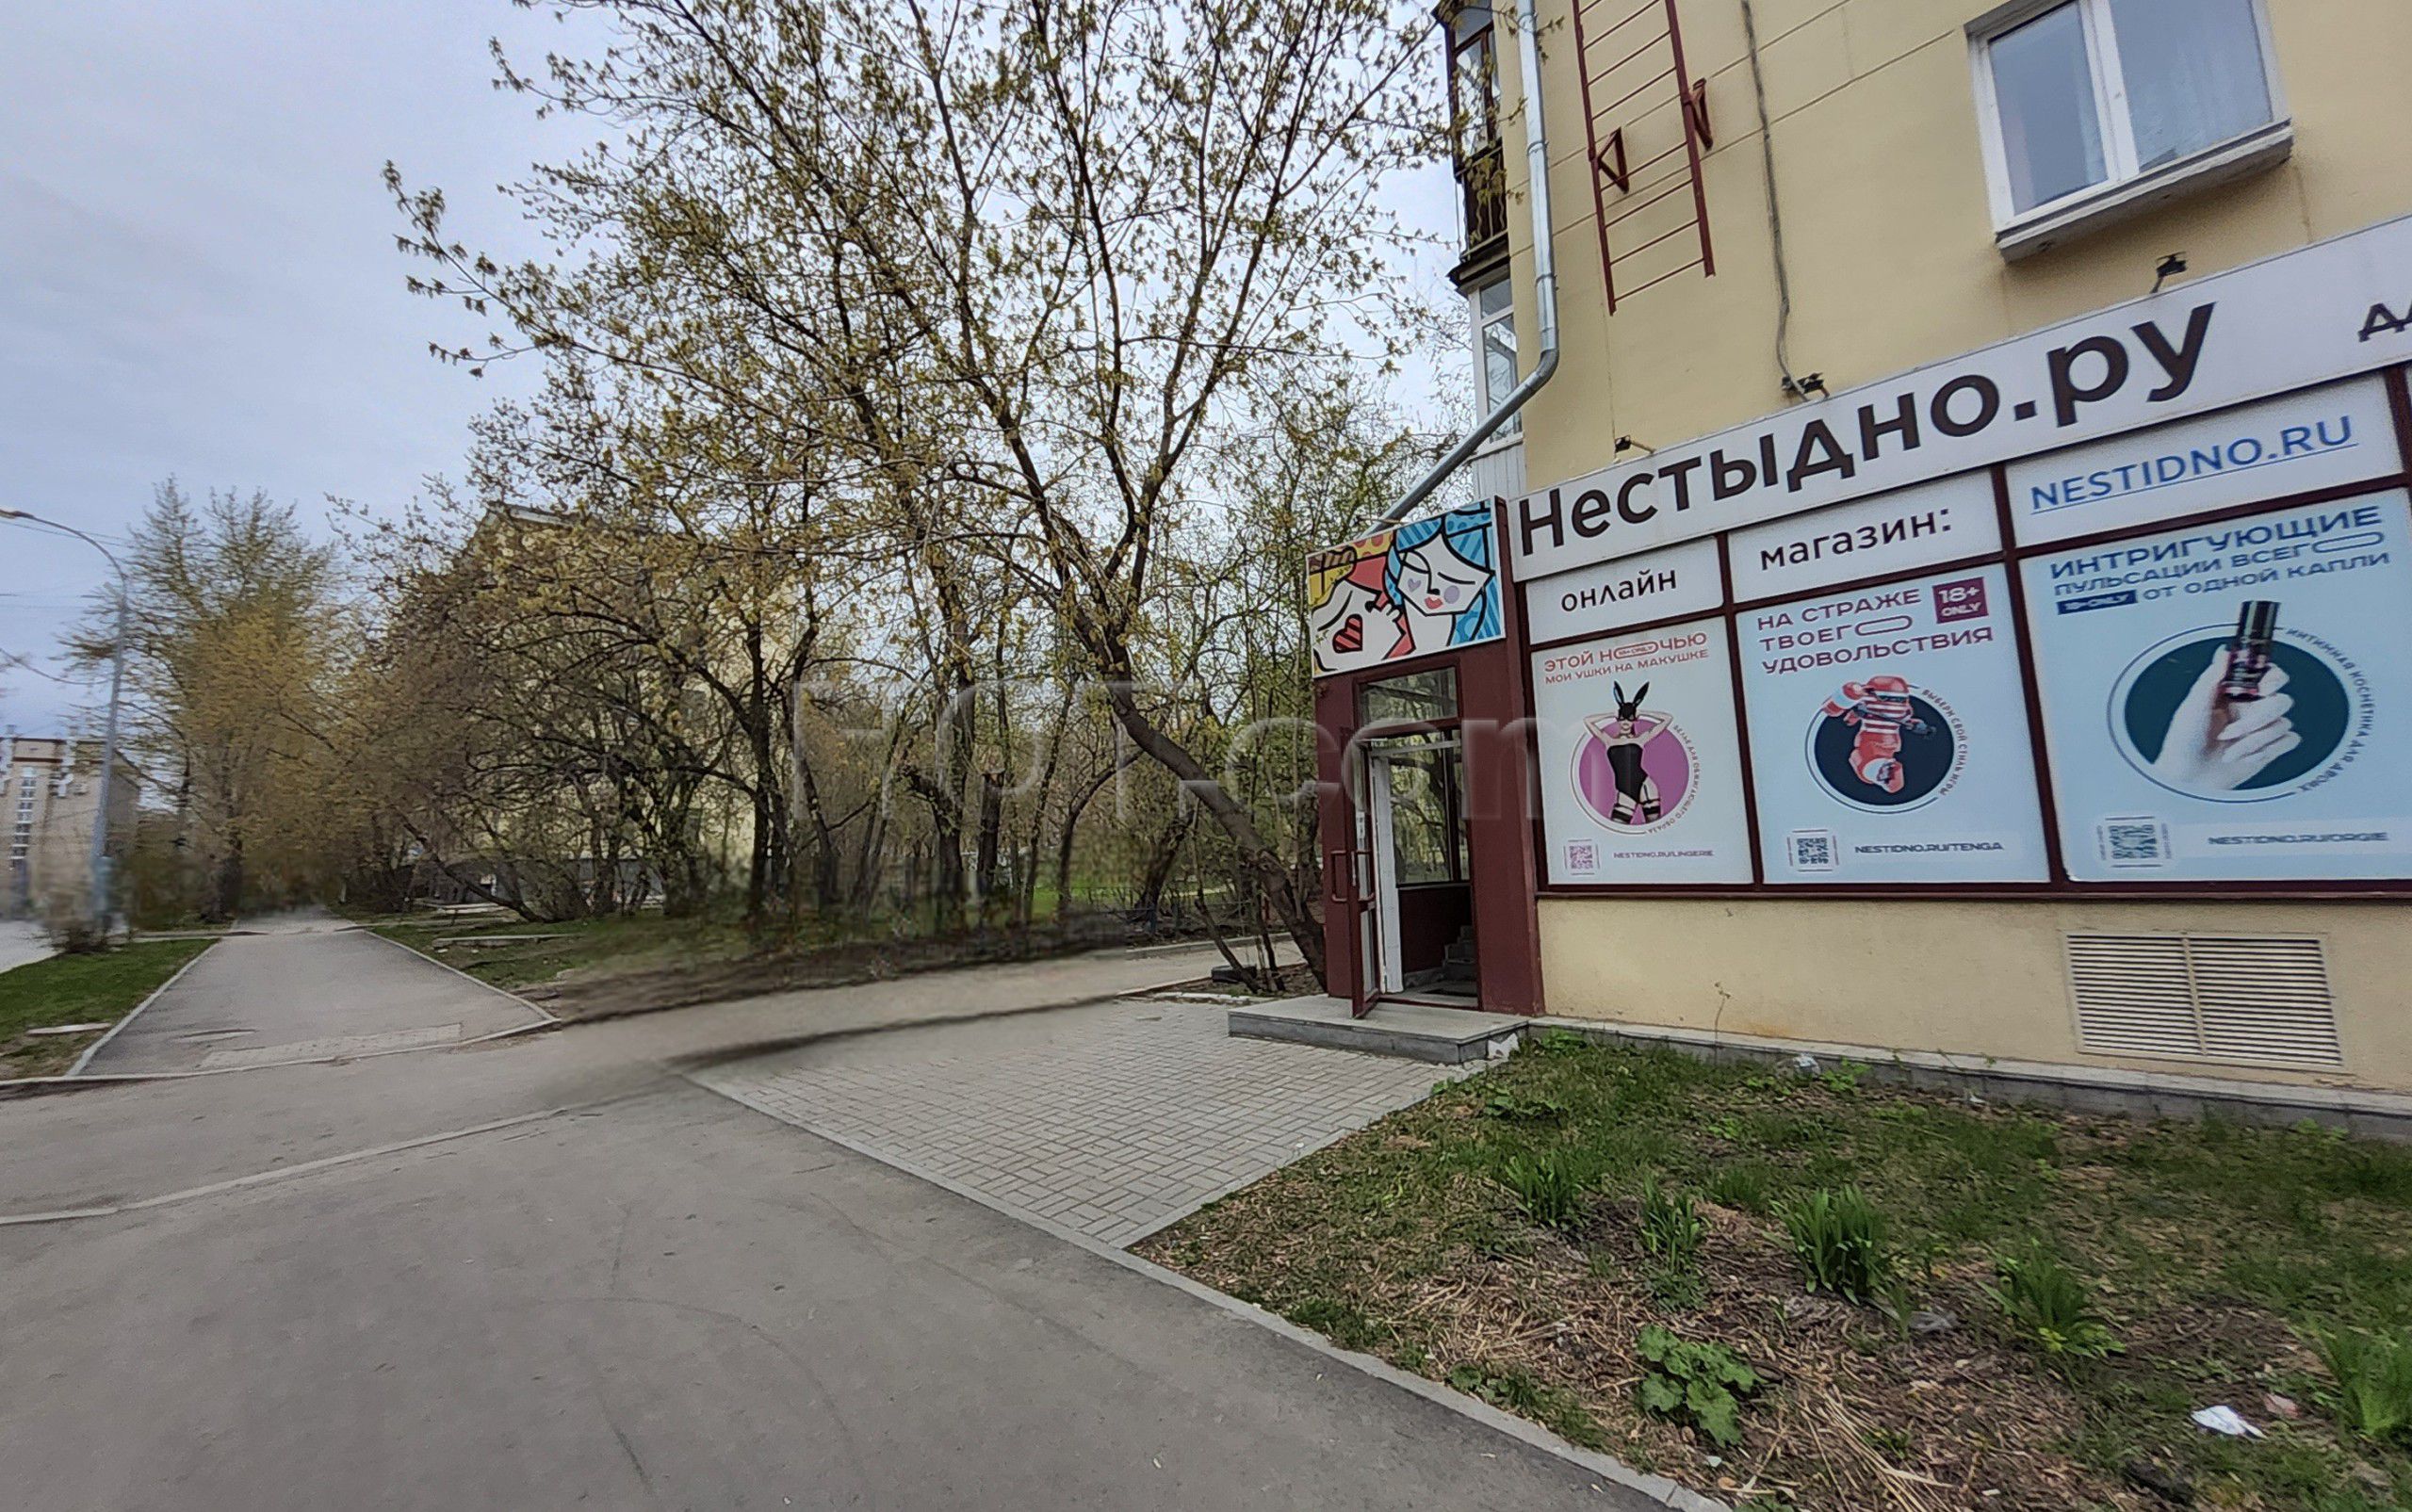 Yekaterinburg, Russia No Shame